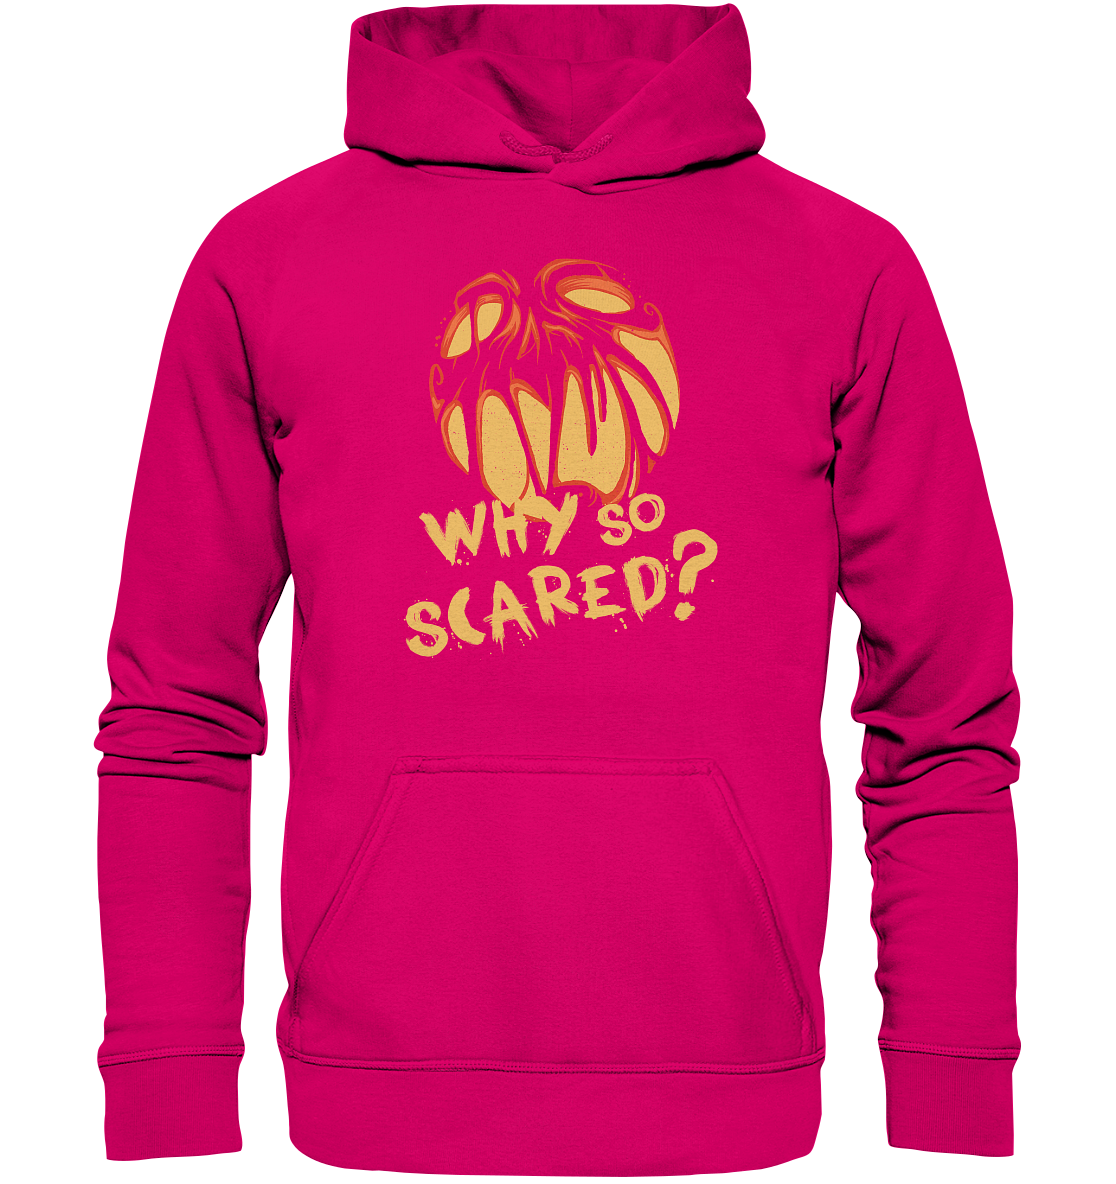 Halloween: Why so scared? - Basic Unisex Hoodie